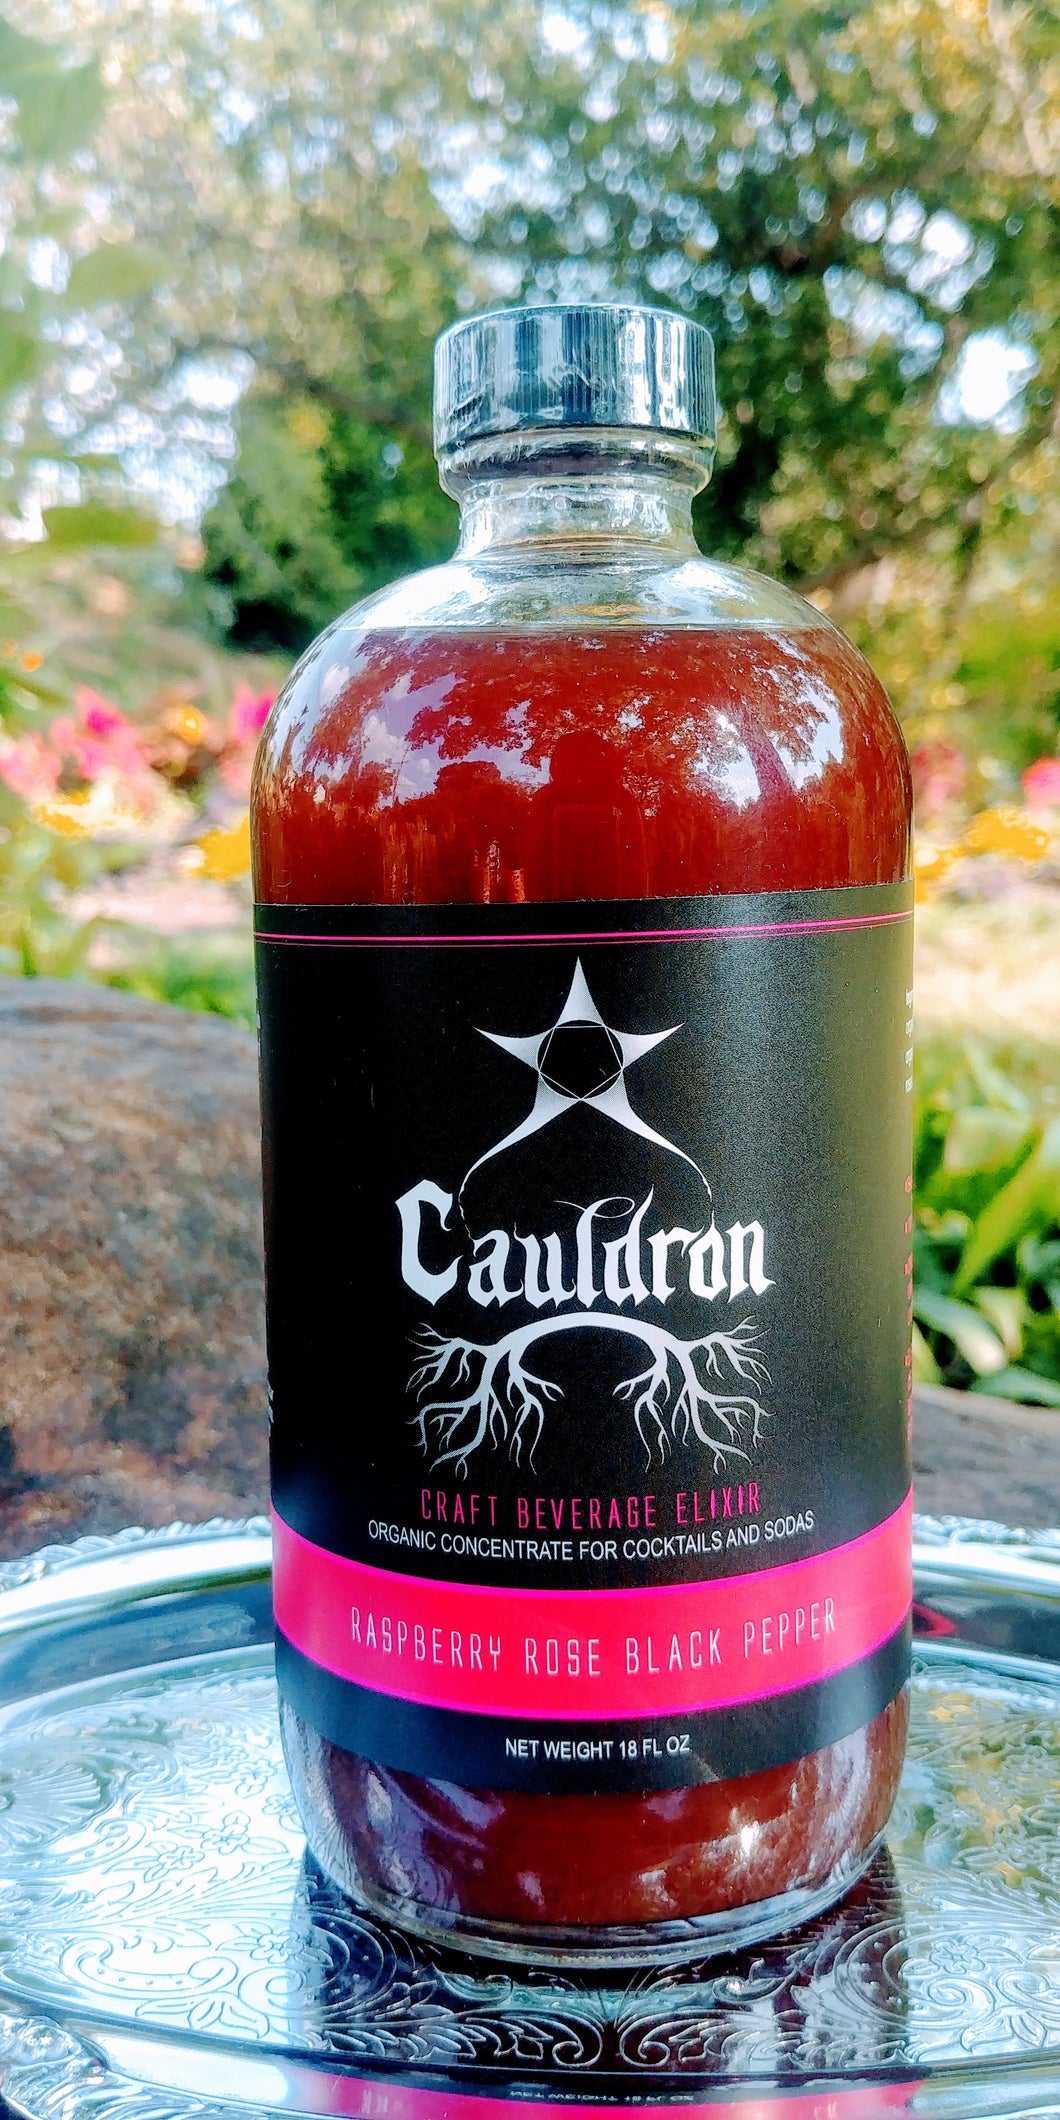 Cauldron RASPBERRY ROSE BLACK PEPPER ELIXIR - Craft Vinegar Shrub 8 oz